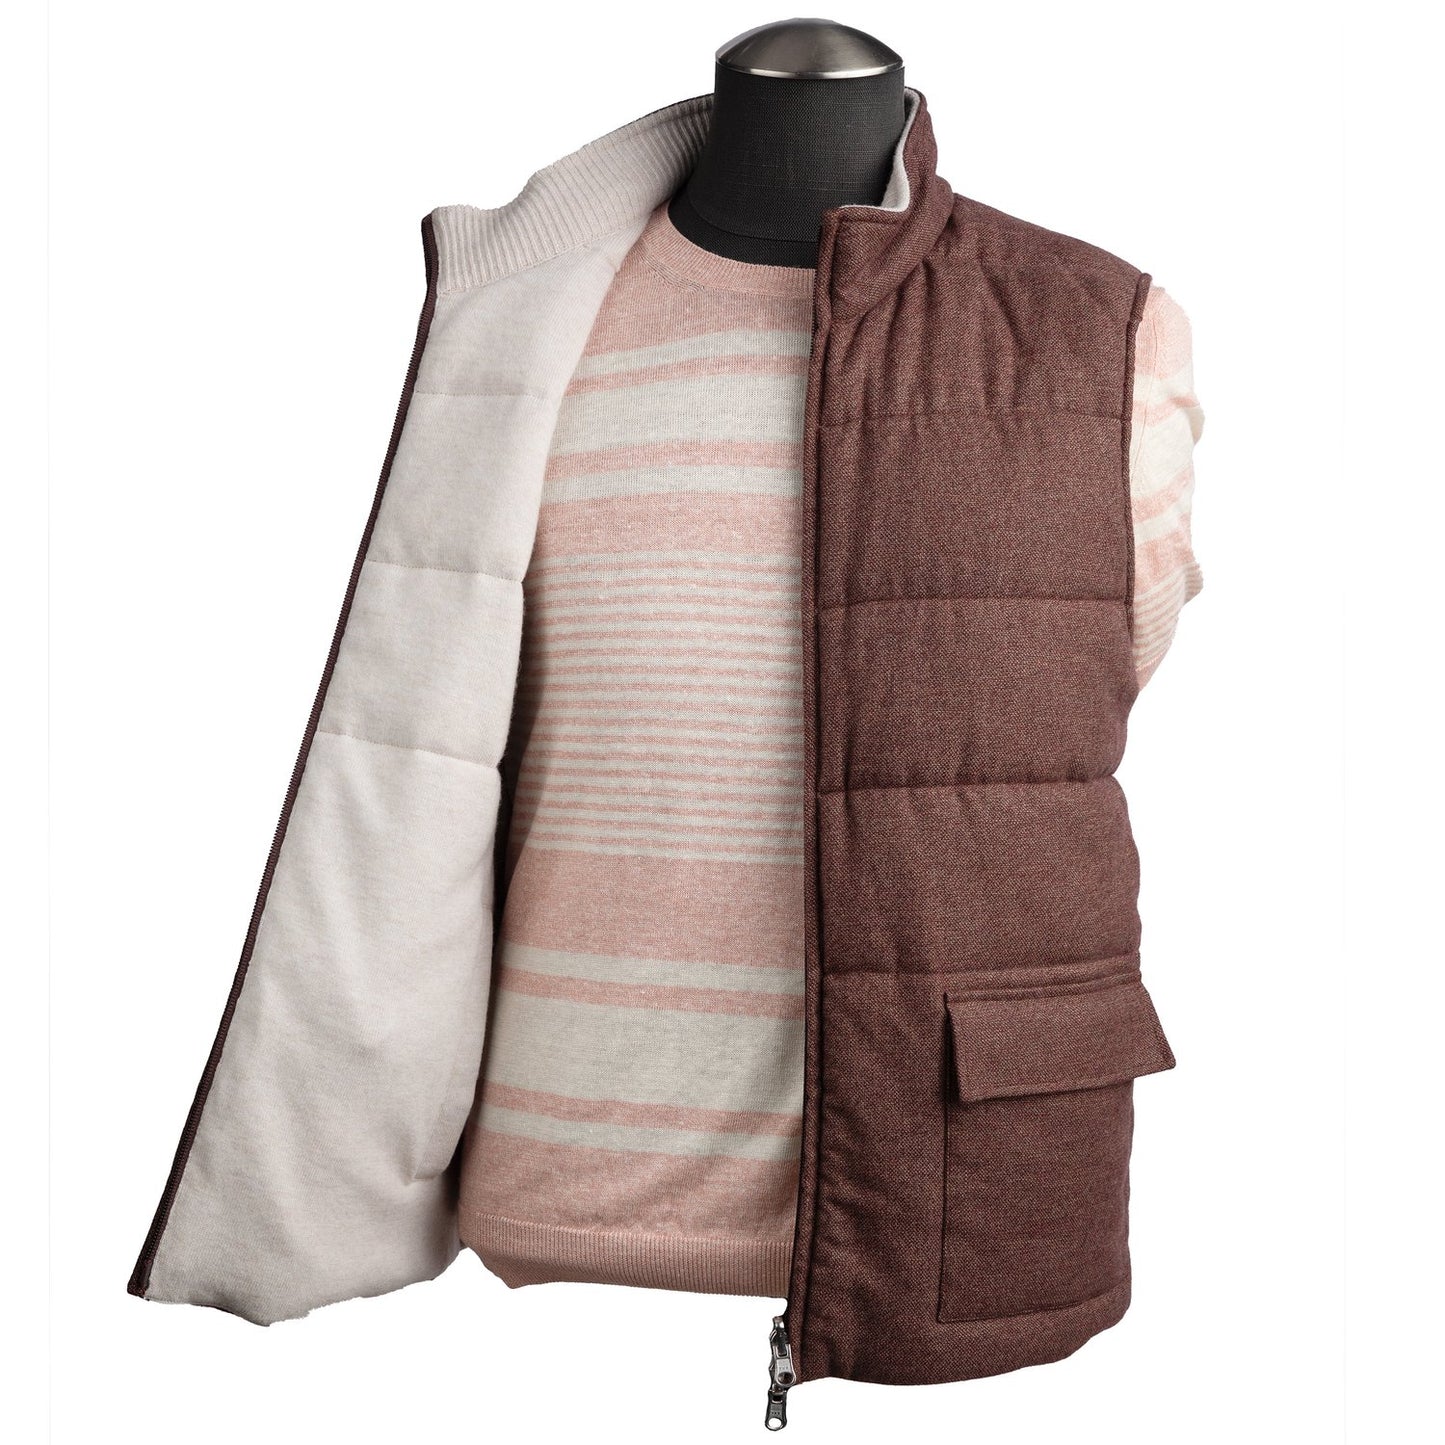 Gran Sasso Reversible Wool Vest in Mocha and Tan